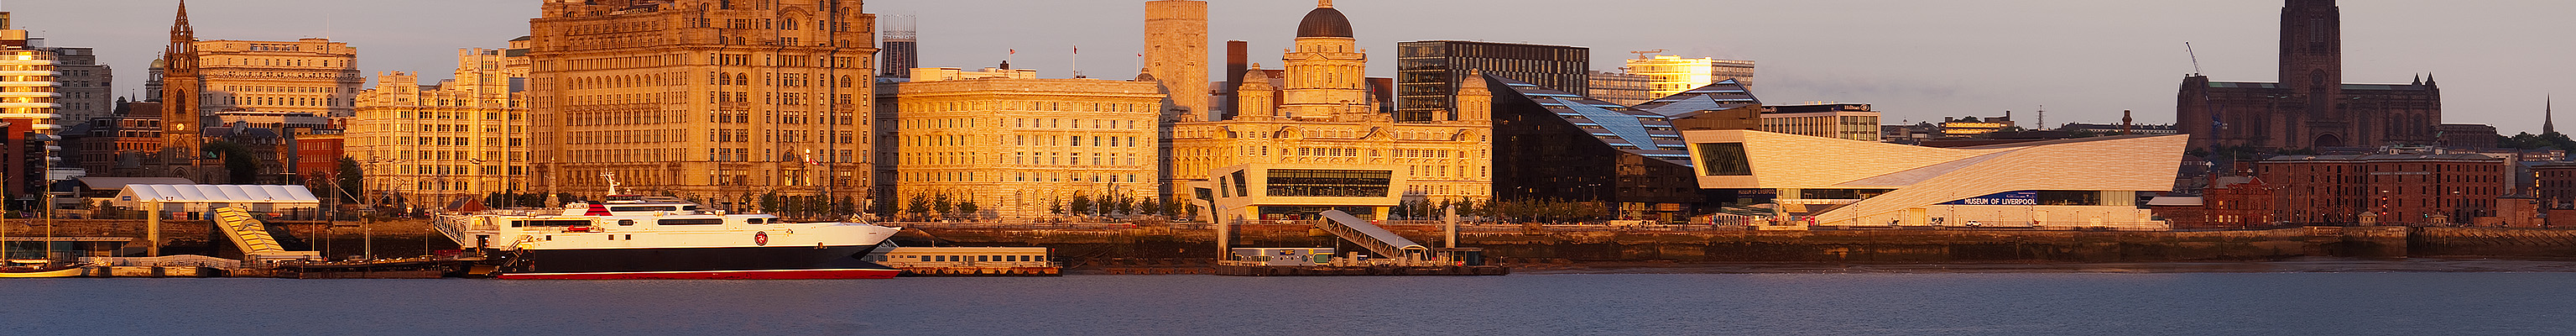 Liverpool. Fine Art Landscape Photography by Gary Waidson